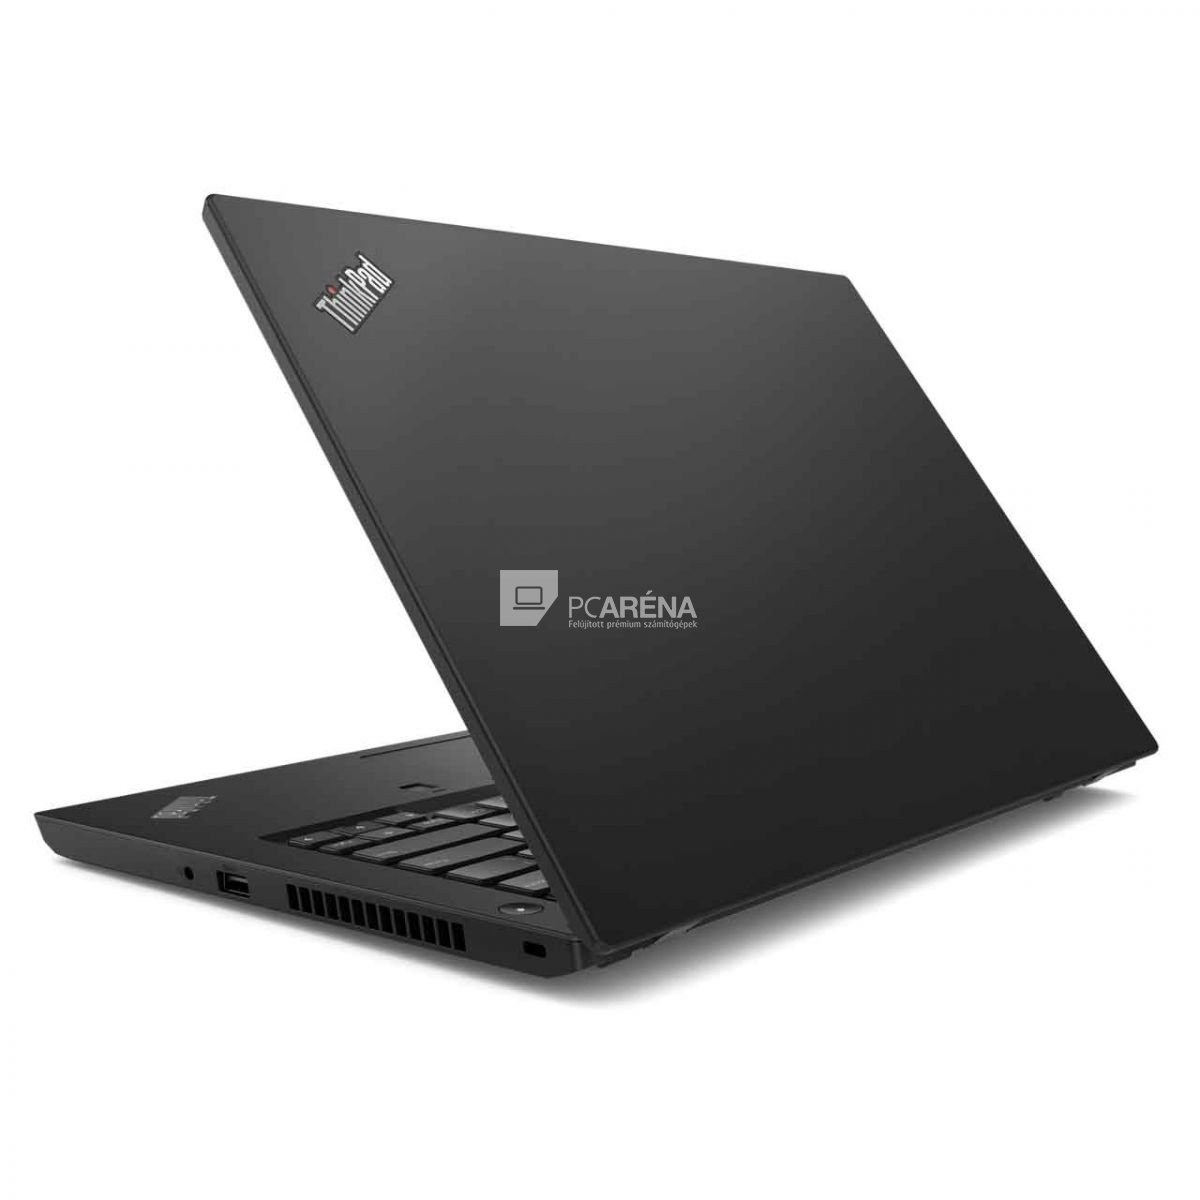 Lenovo ThinkPad L480 laptop